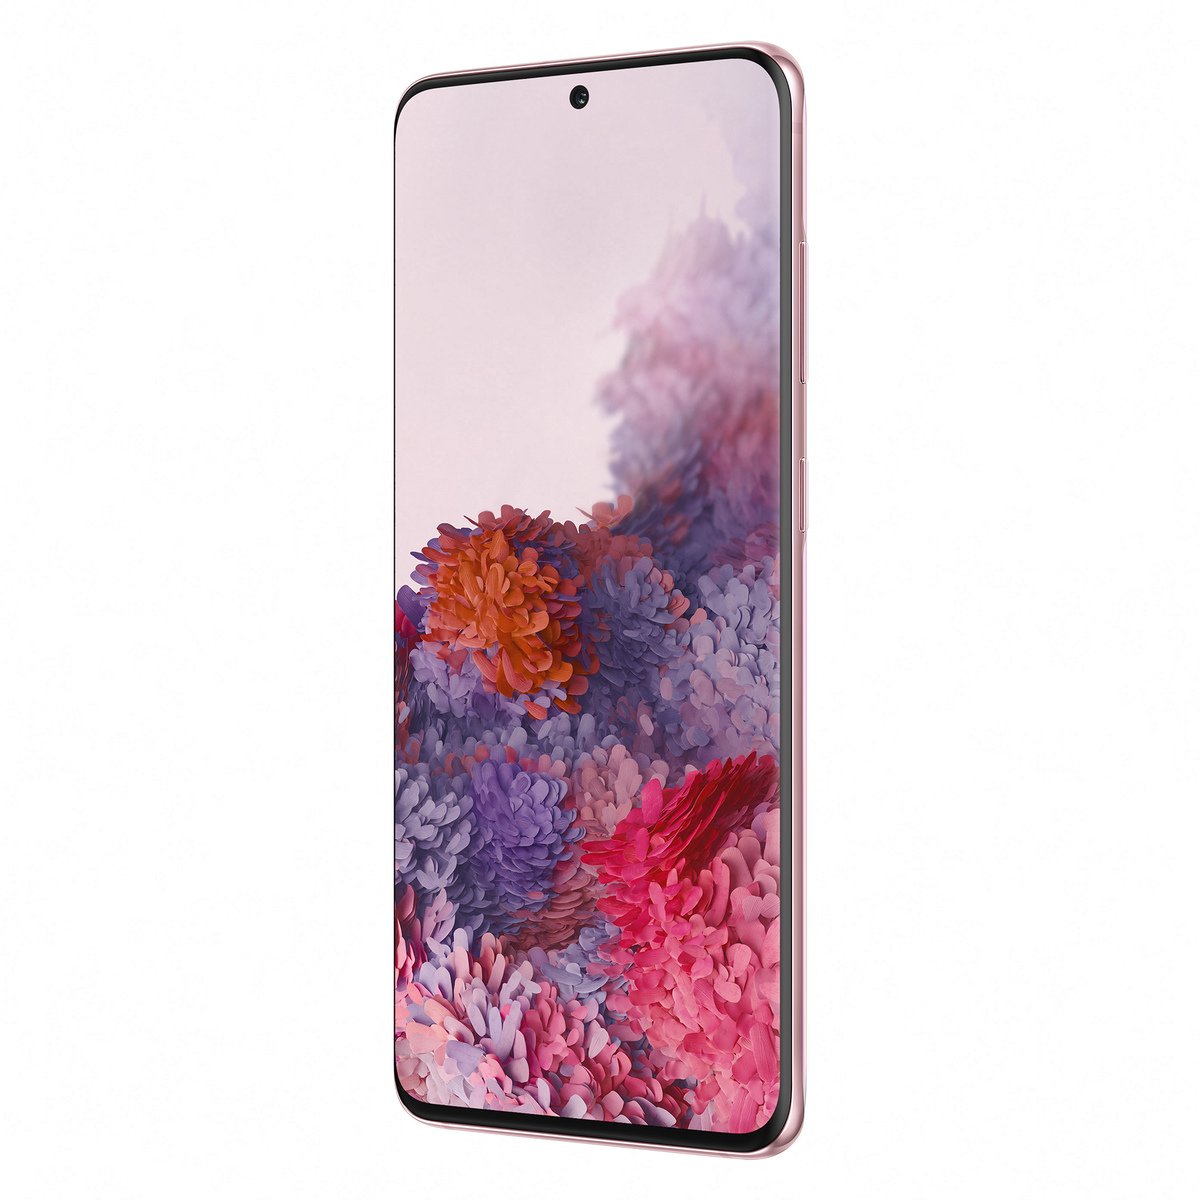 Samsung Galaxy S20 G980 128GB Cloud Pink